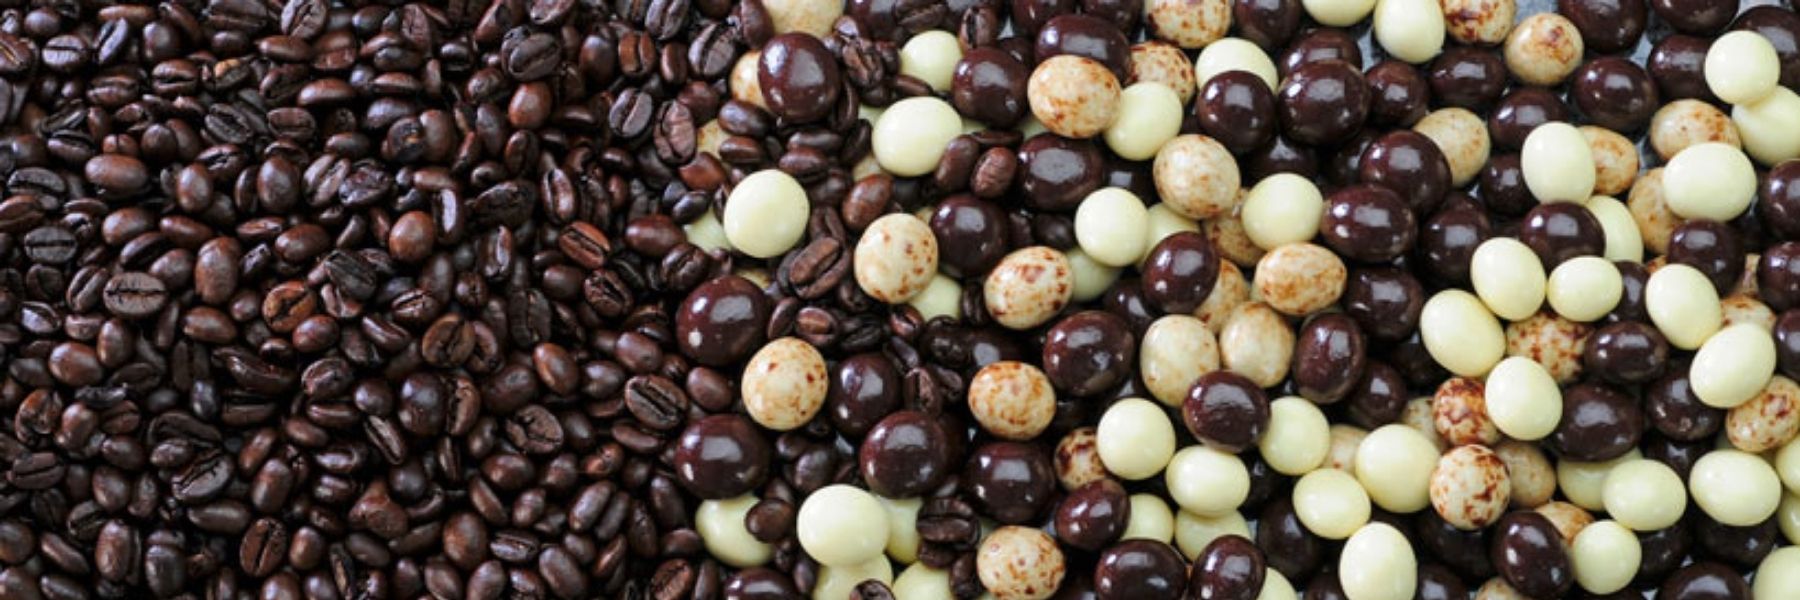 Dilettante Chocolates Gluten-Free Chocolate Covered Espresso Beans